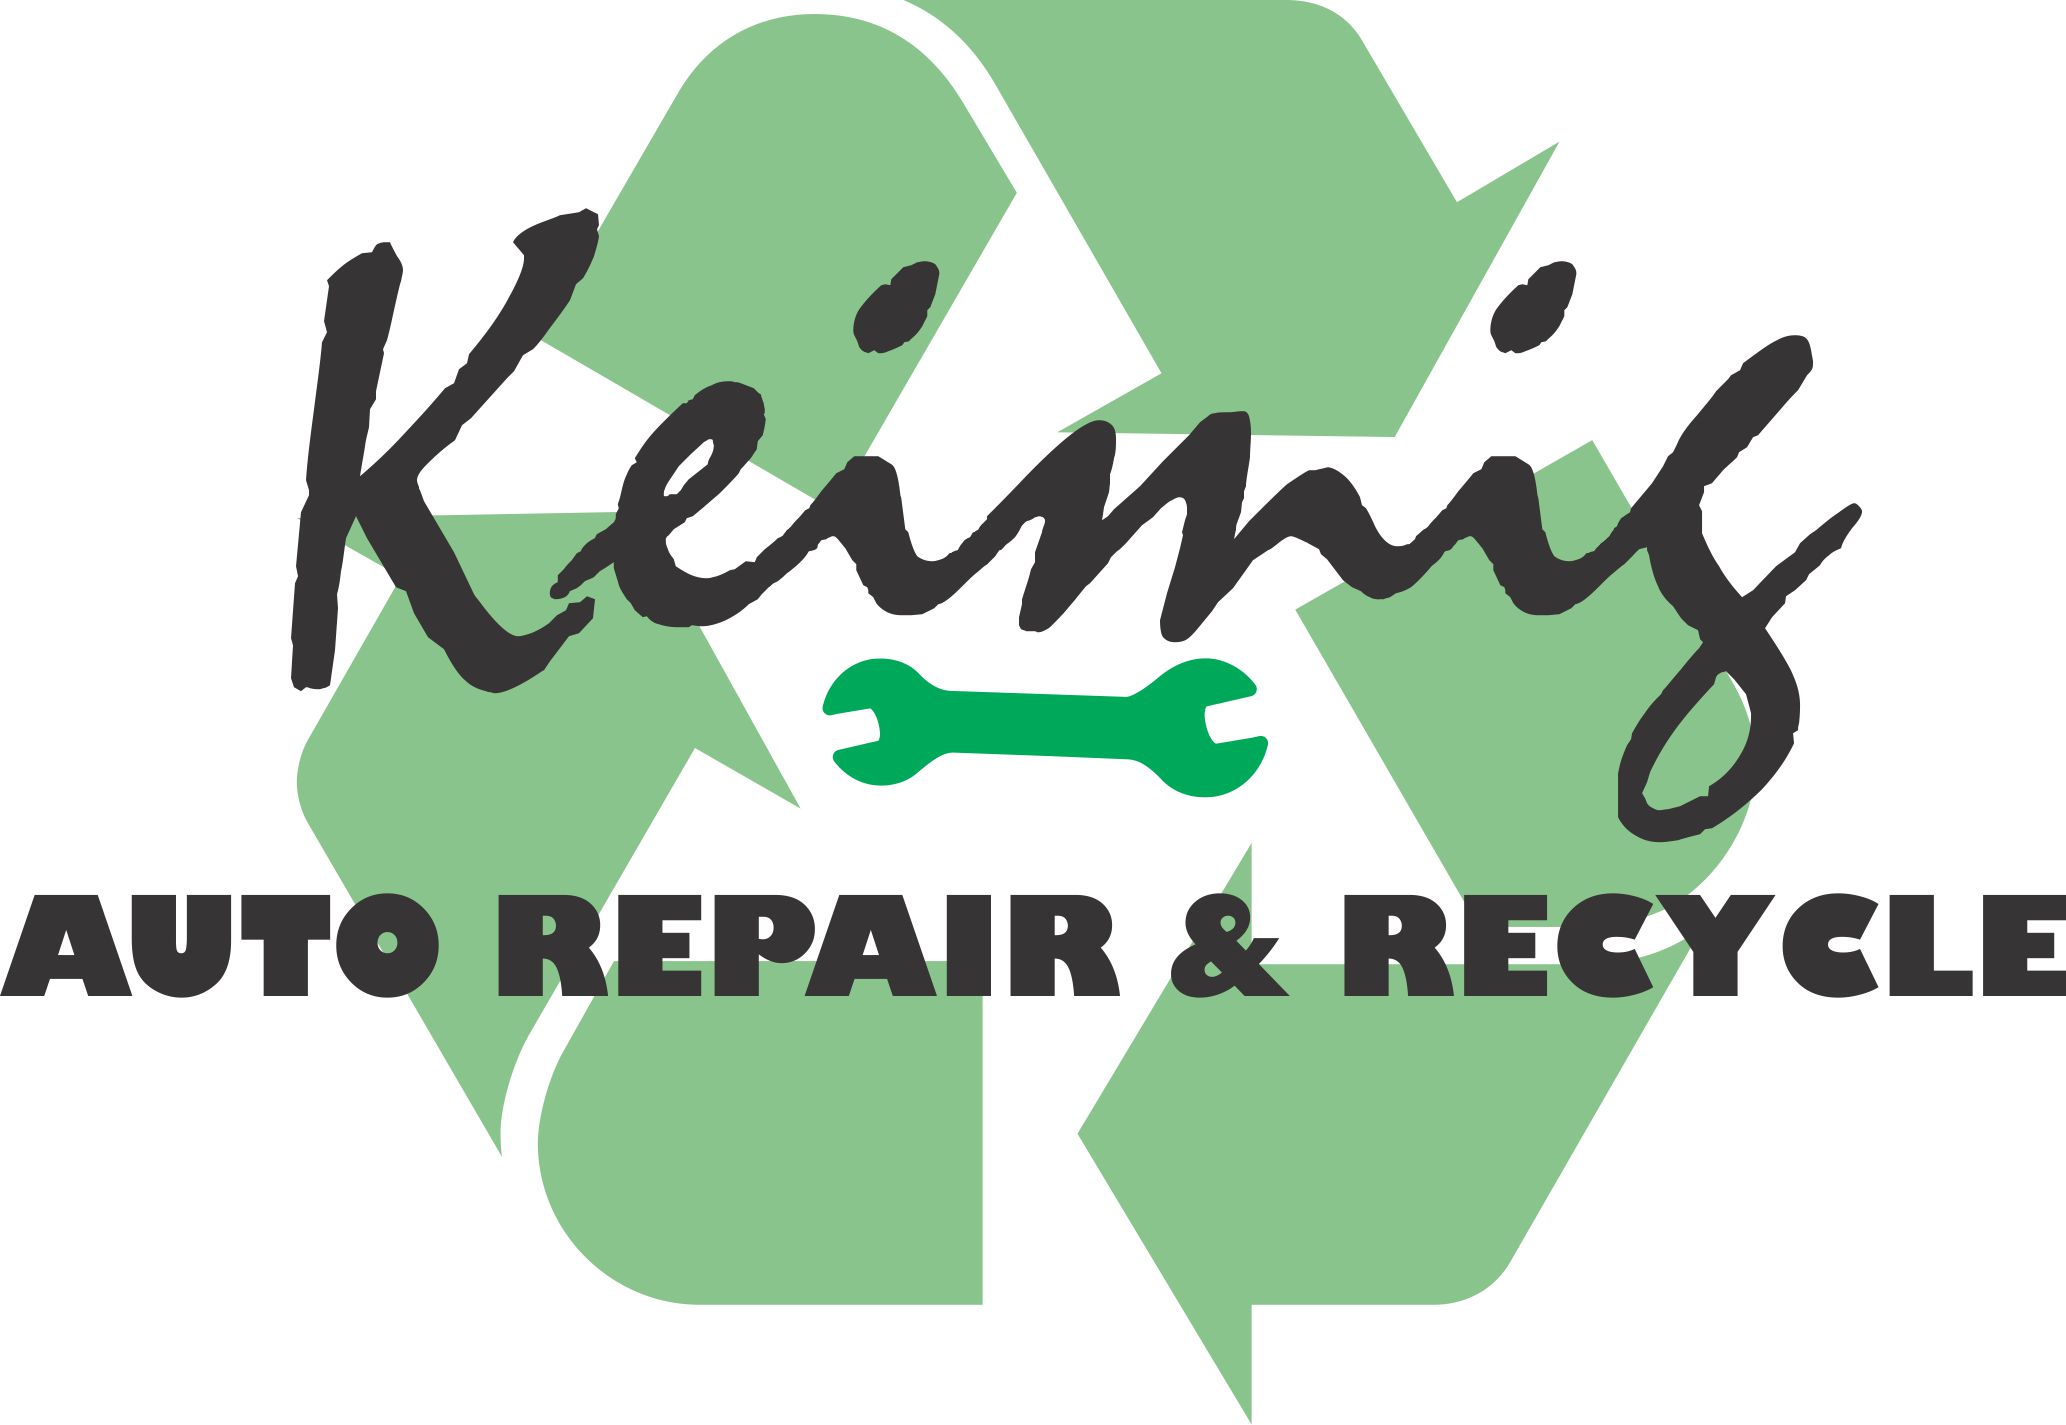 Keimig Auto Repair & Recycle's Image